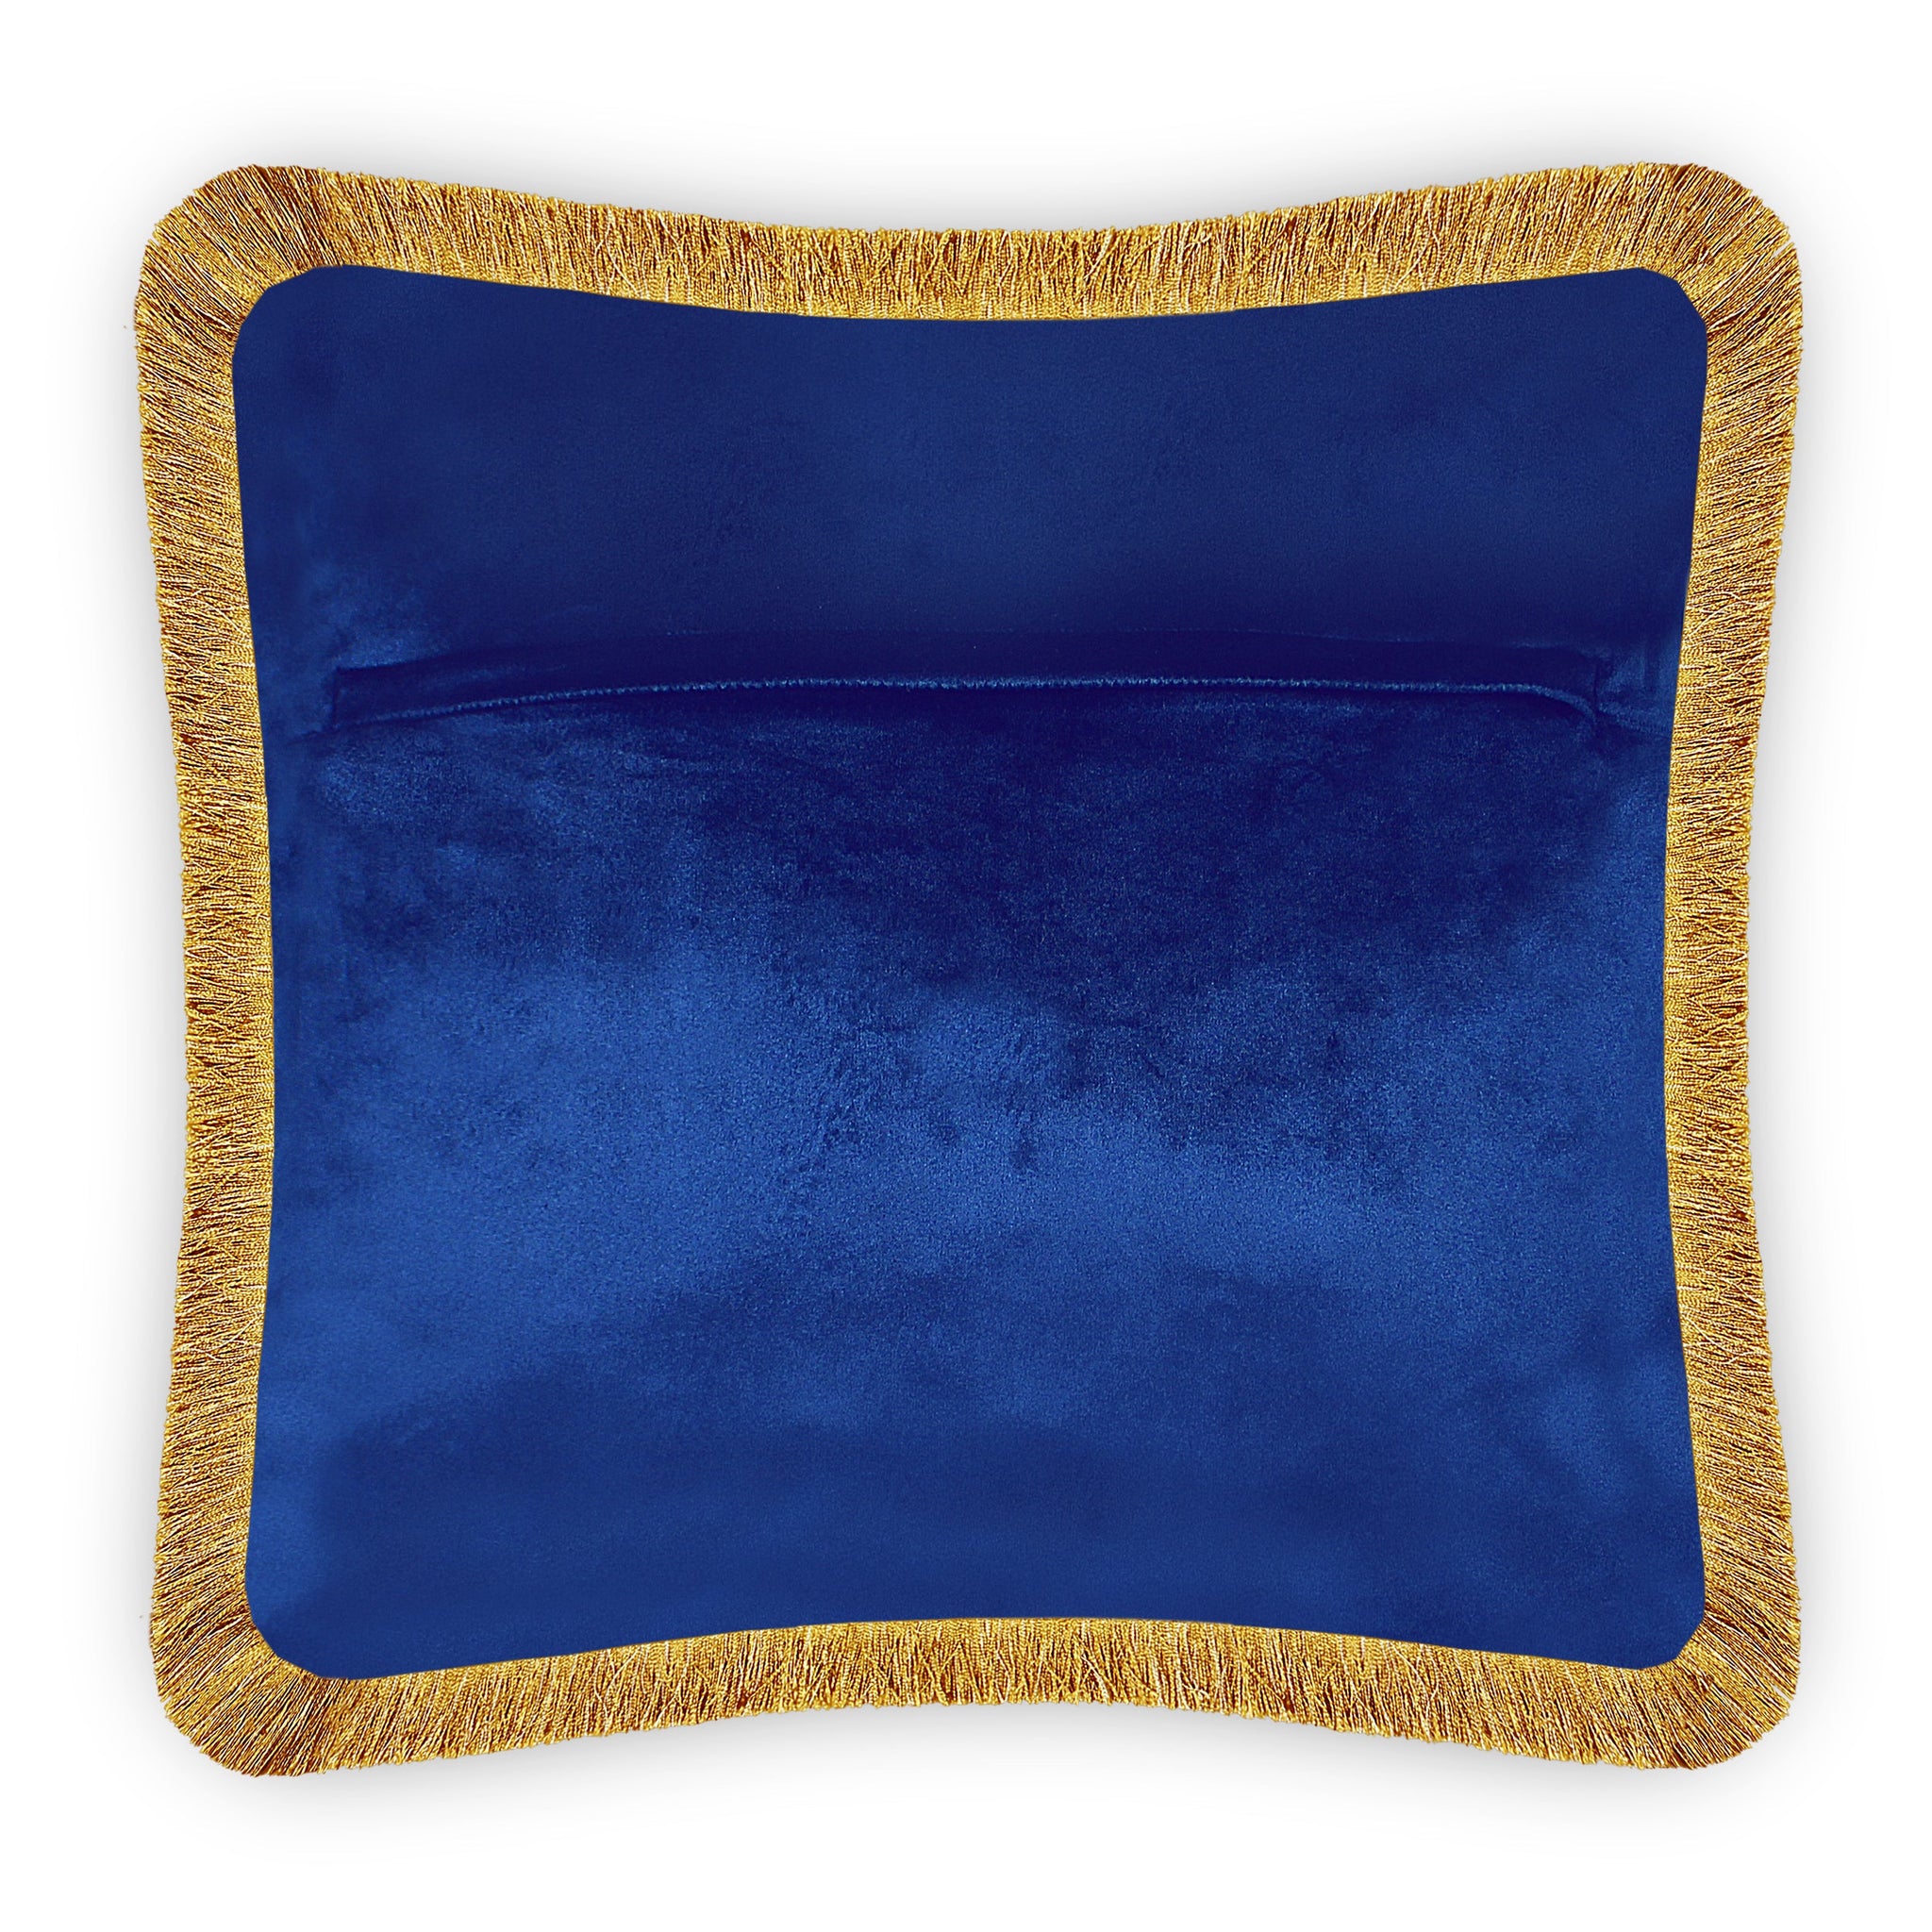 Blue Velvet Cushion Cover Arabesque Floral Decorative Pillowcase Classic Home Decor Throw Pillow for Sofa Chair Living Room 45x45 cm 18x18 In